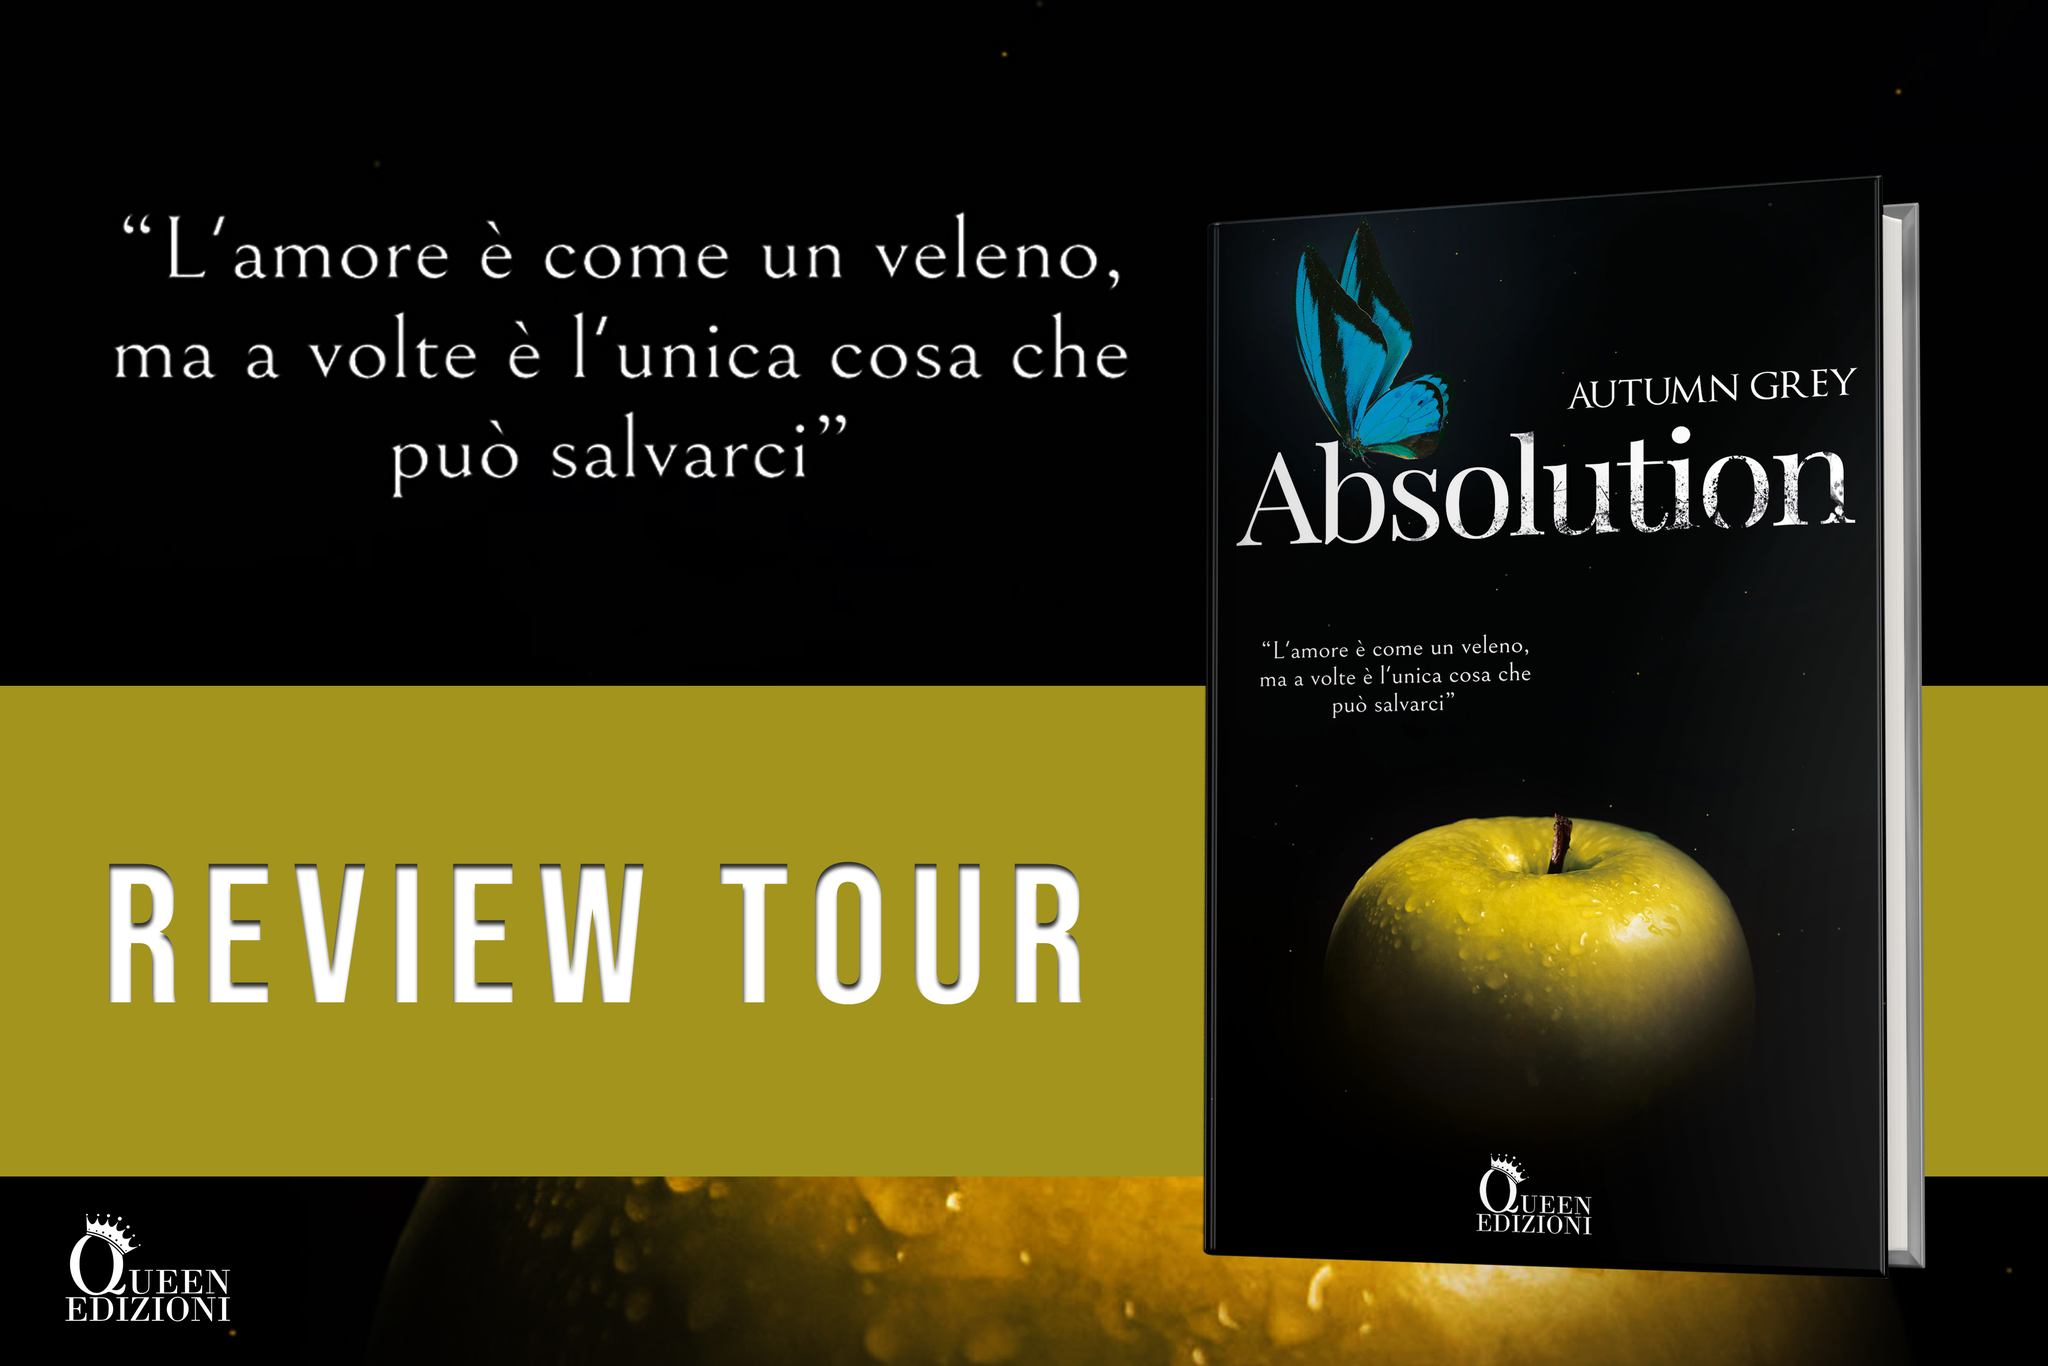 absolution di autumn grey review tour